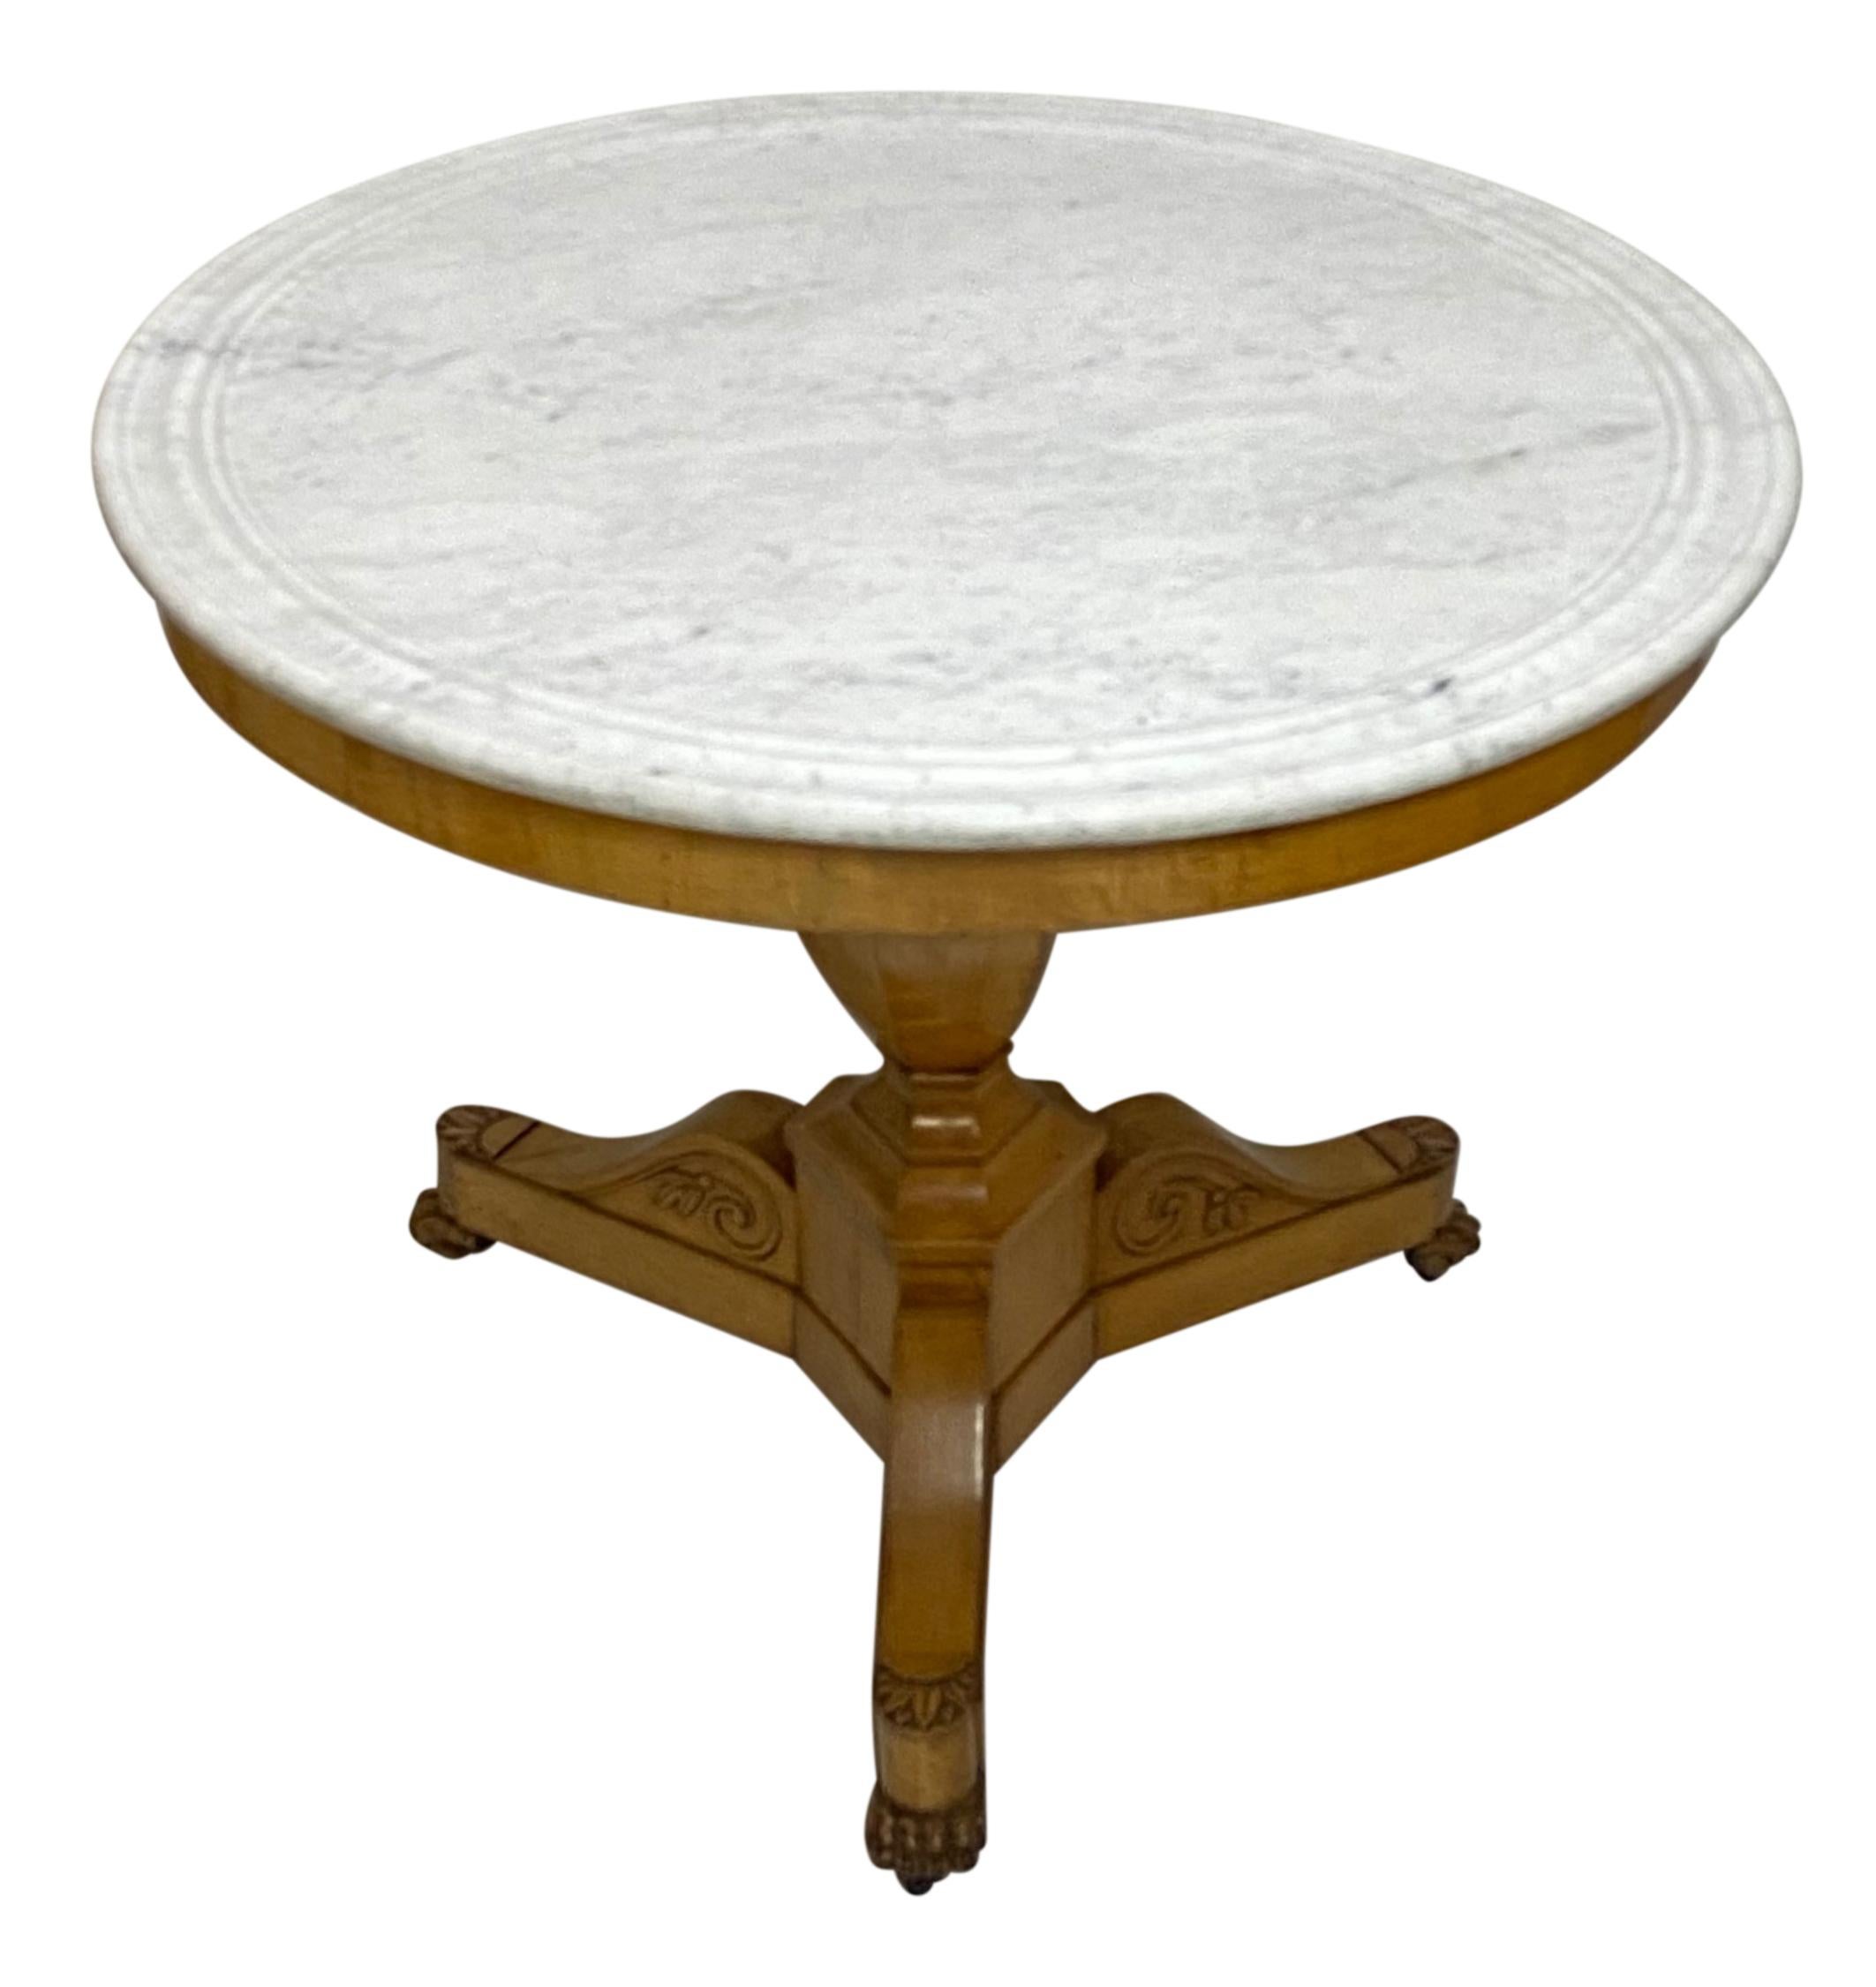 European Biedermeier Center Table with Marble Top, 19th Century